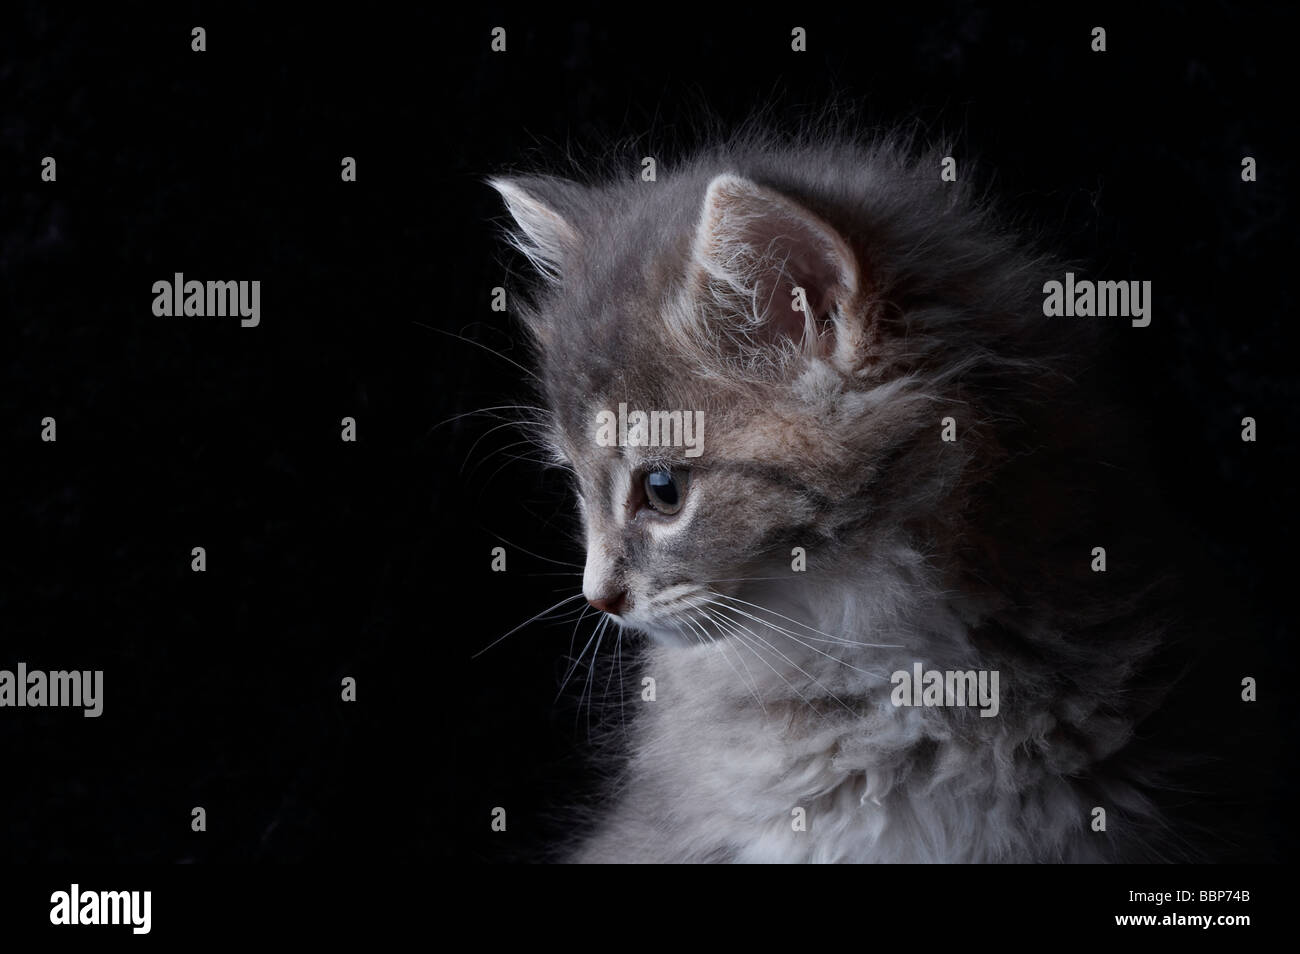 Fluffy grey kitten on black background Stock Photo